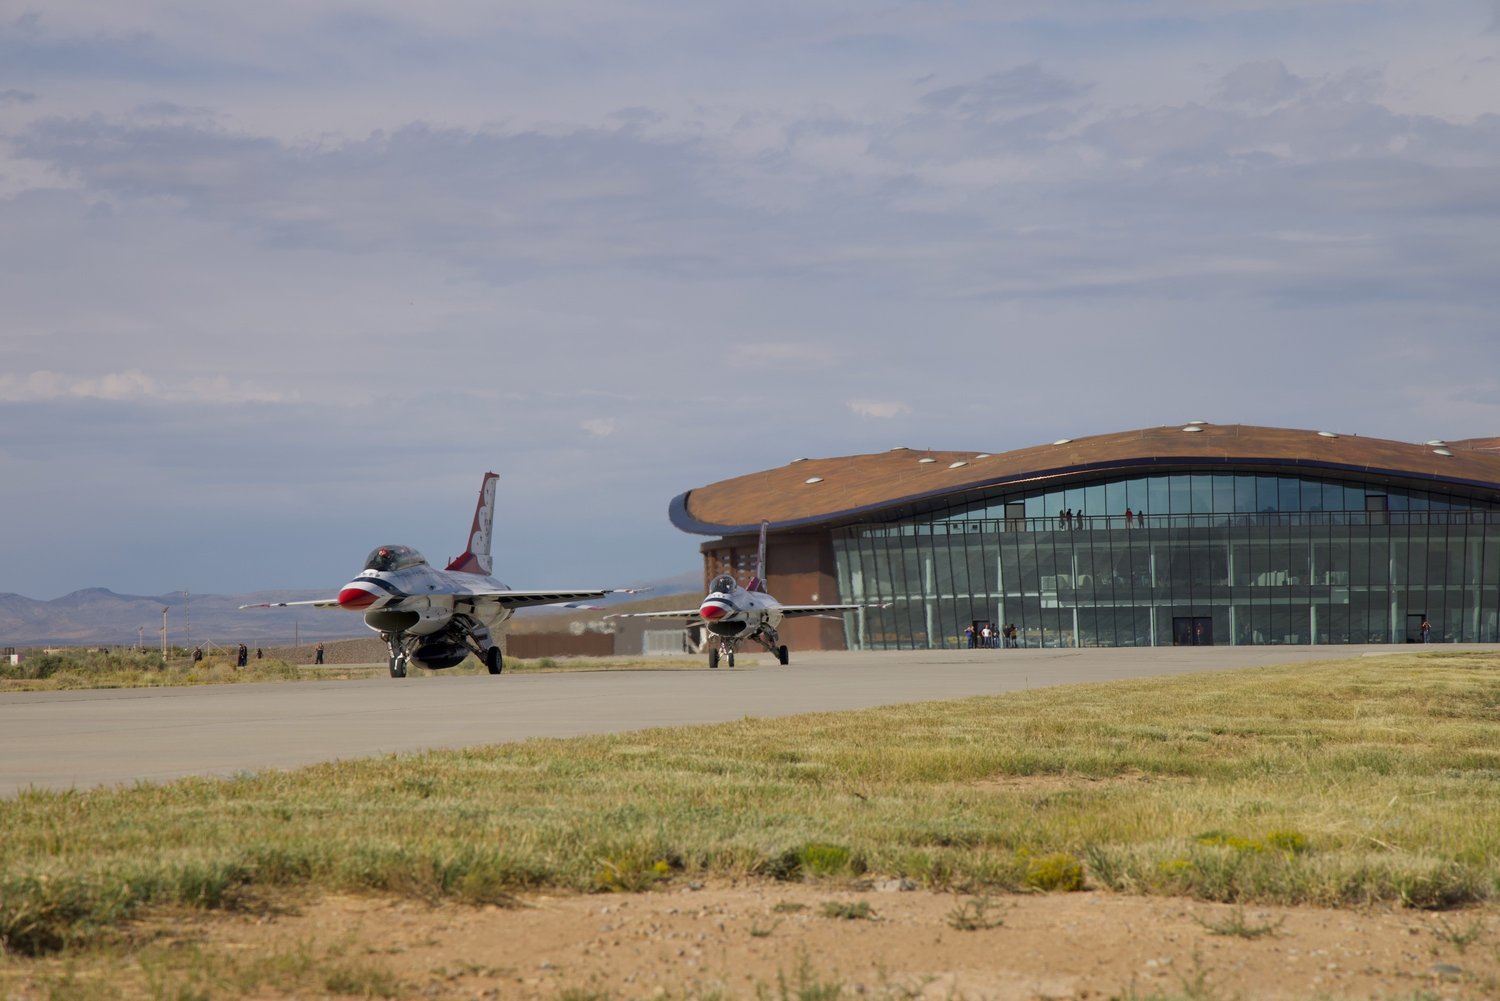 Thunderbirds at Spaceport America’s Horizontal Launch Area.